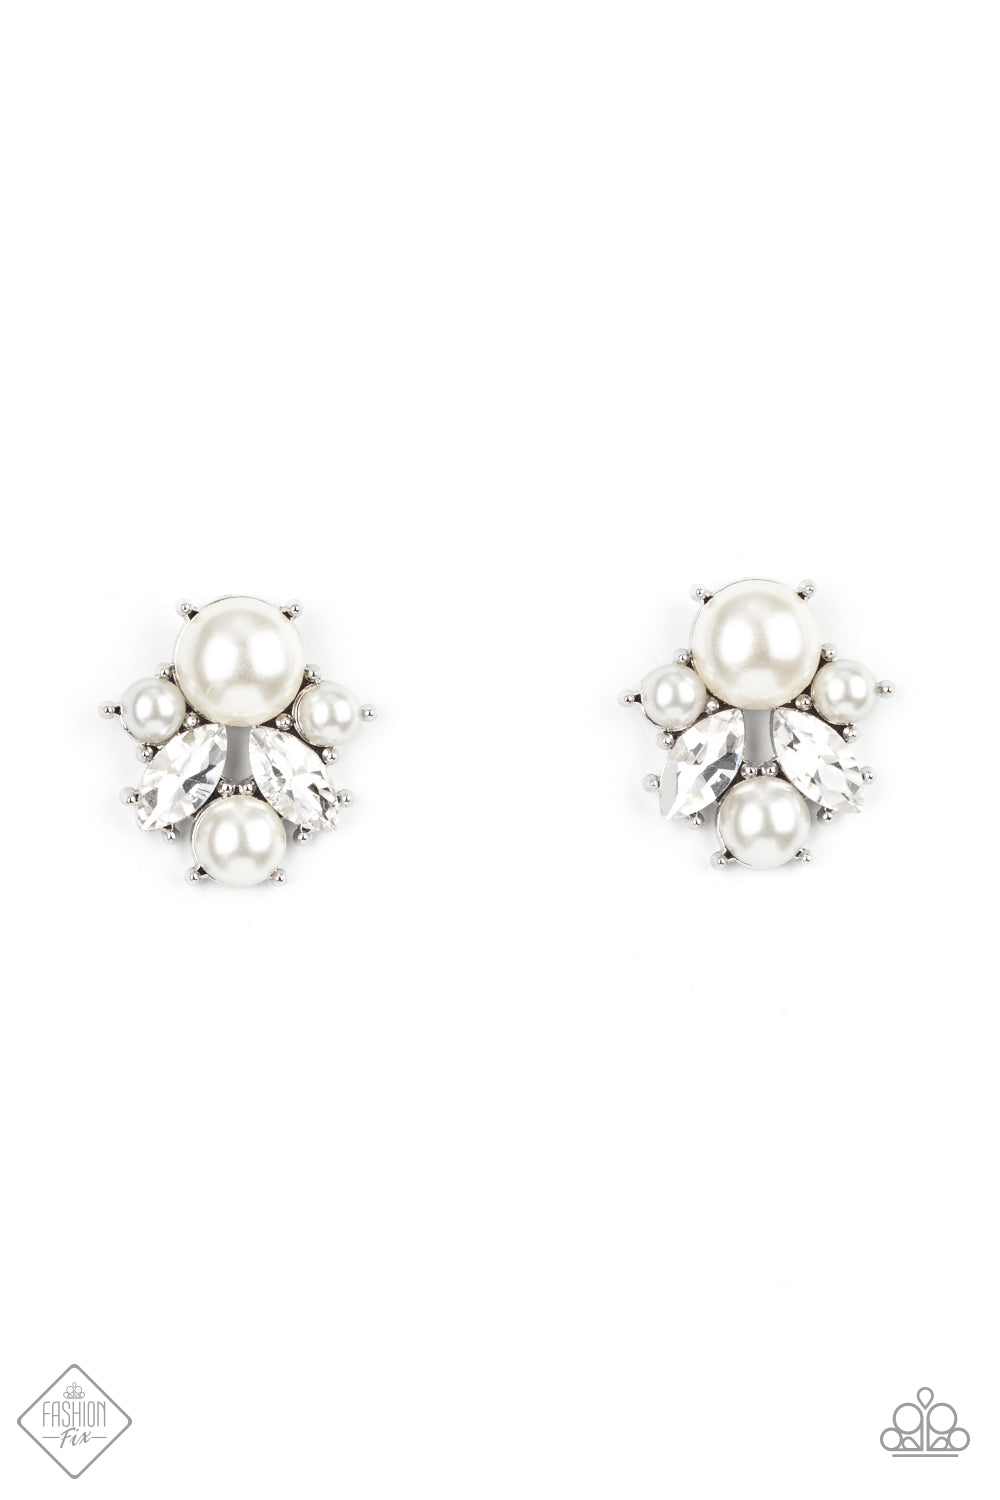 Paparazzi Accessories - Royal Reverie White Earrings Fashion Fix July 2021 #FFA0721